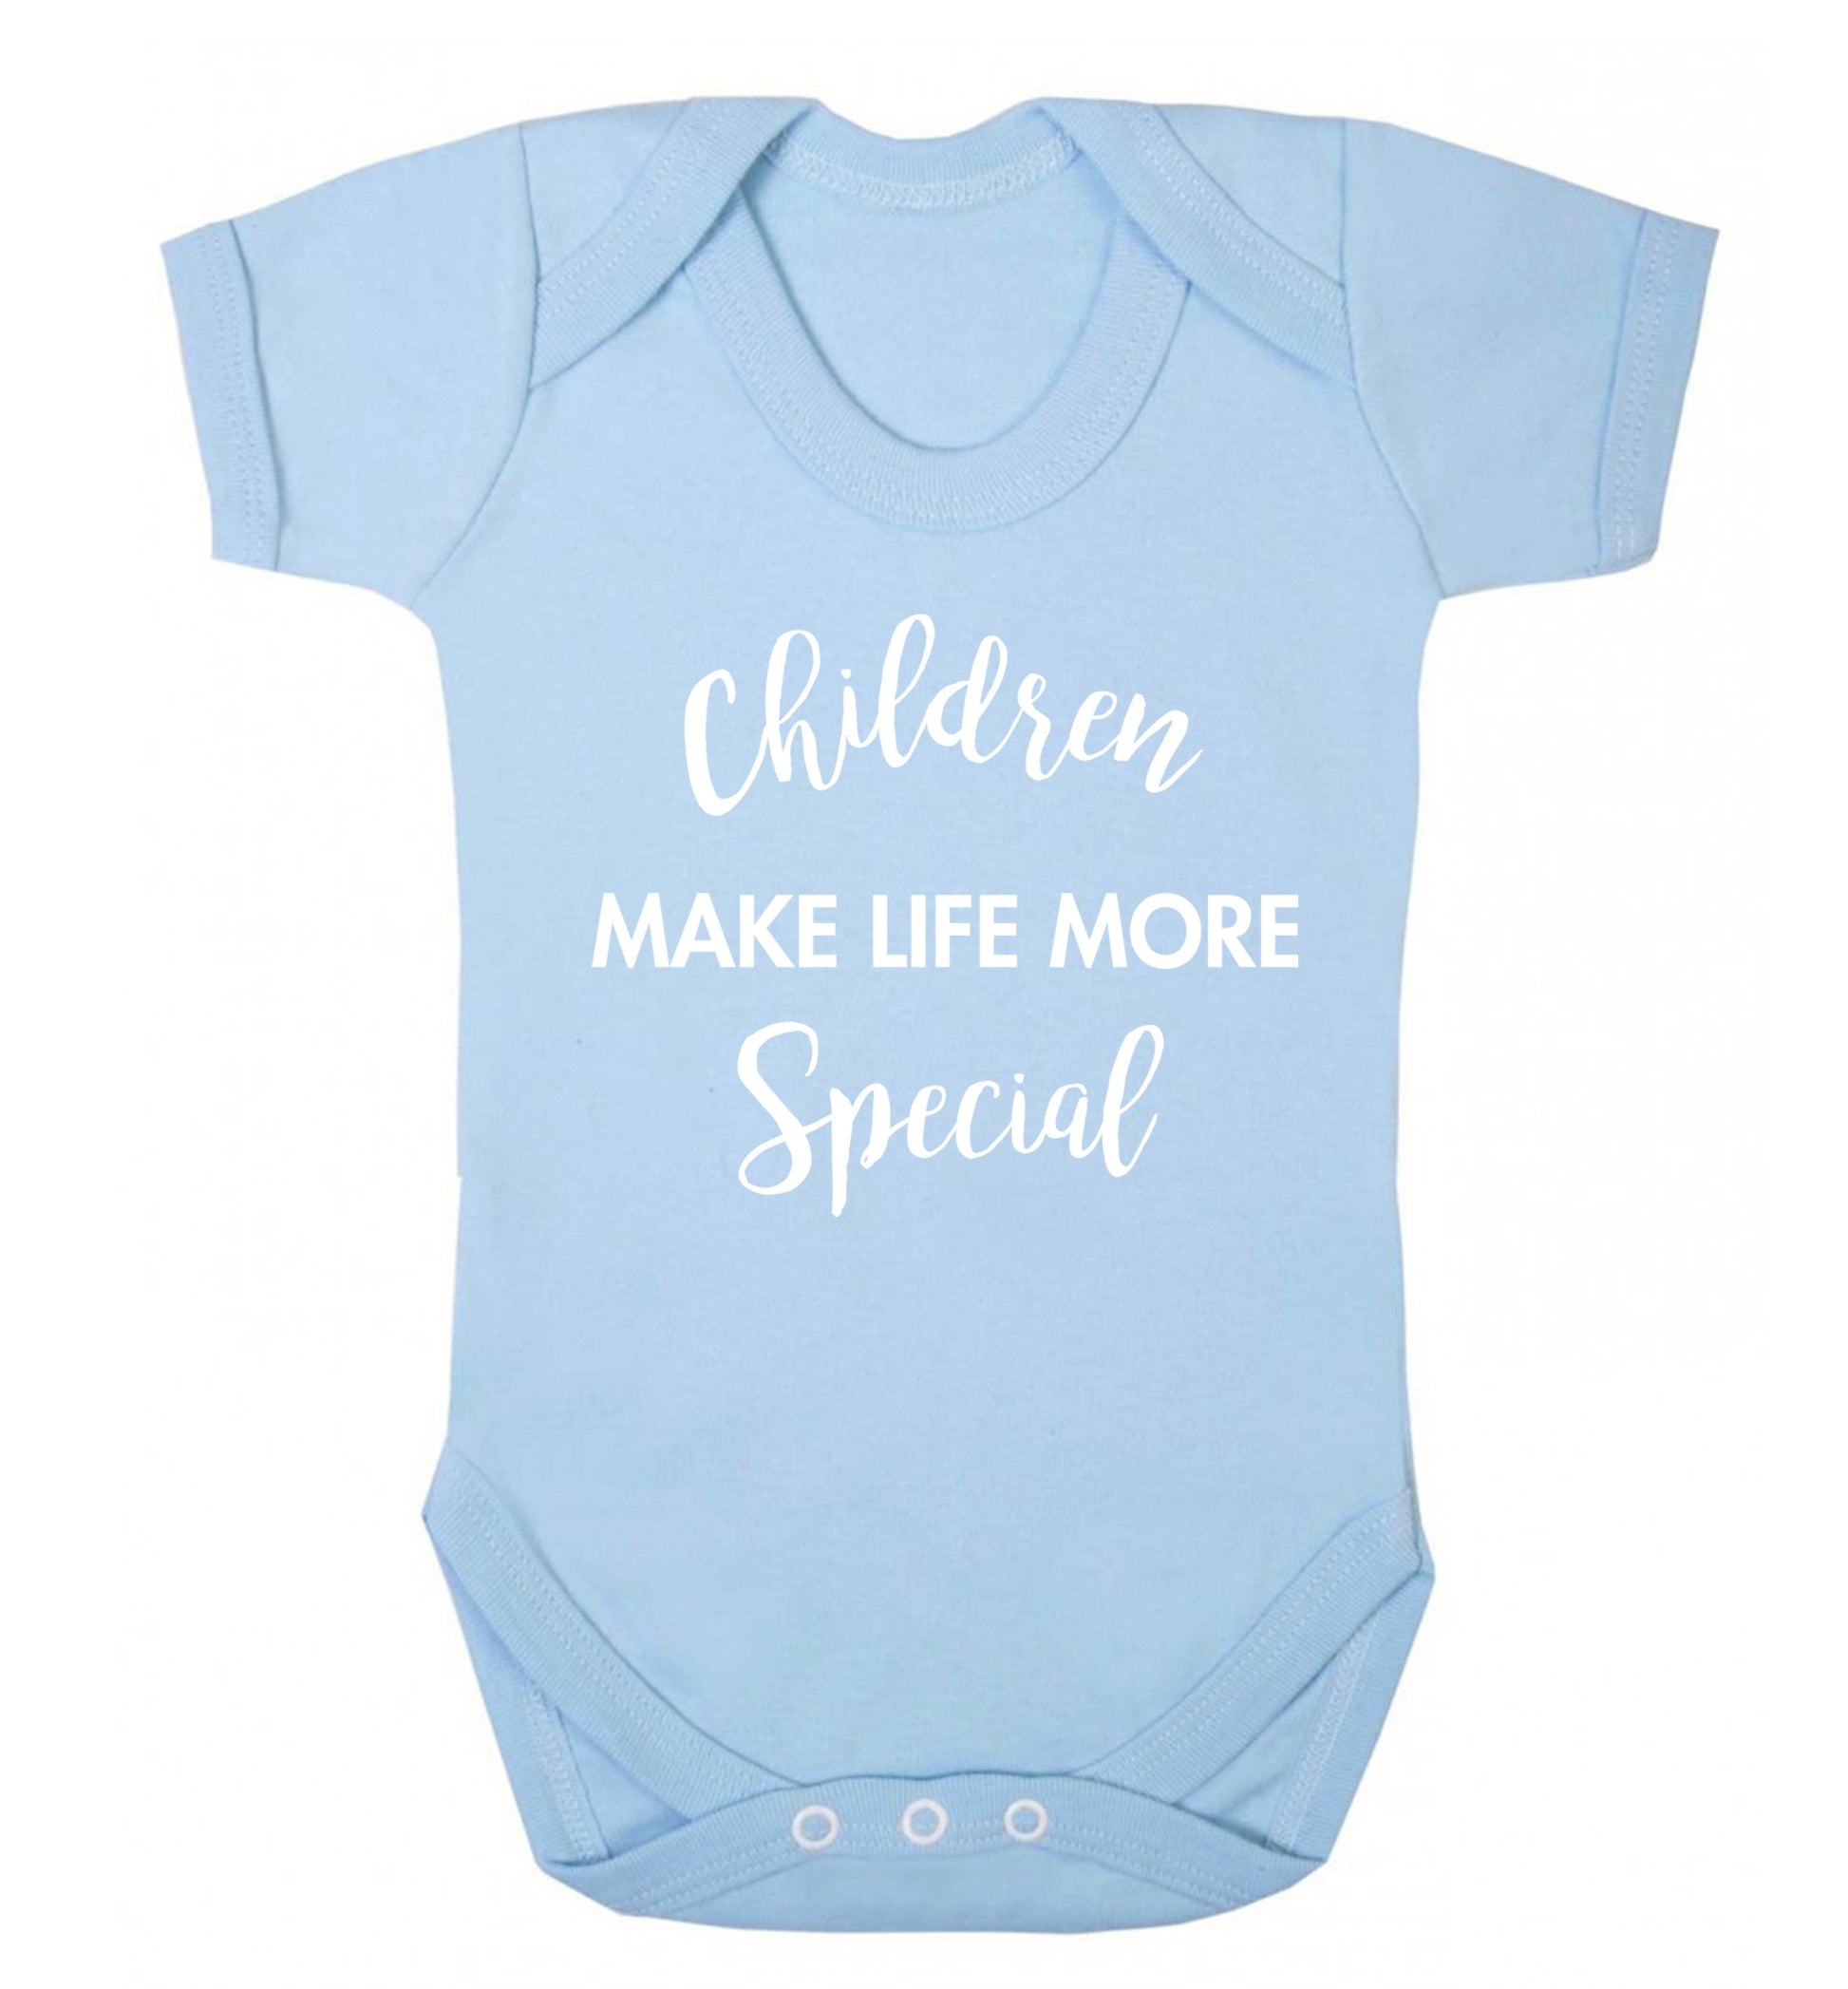 Children make life more special Baby Vest pale blue 18-24 months